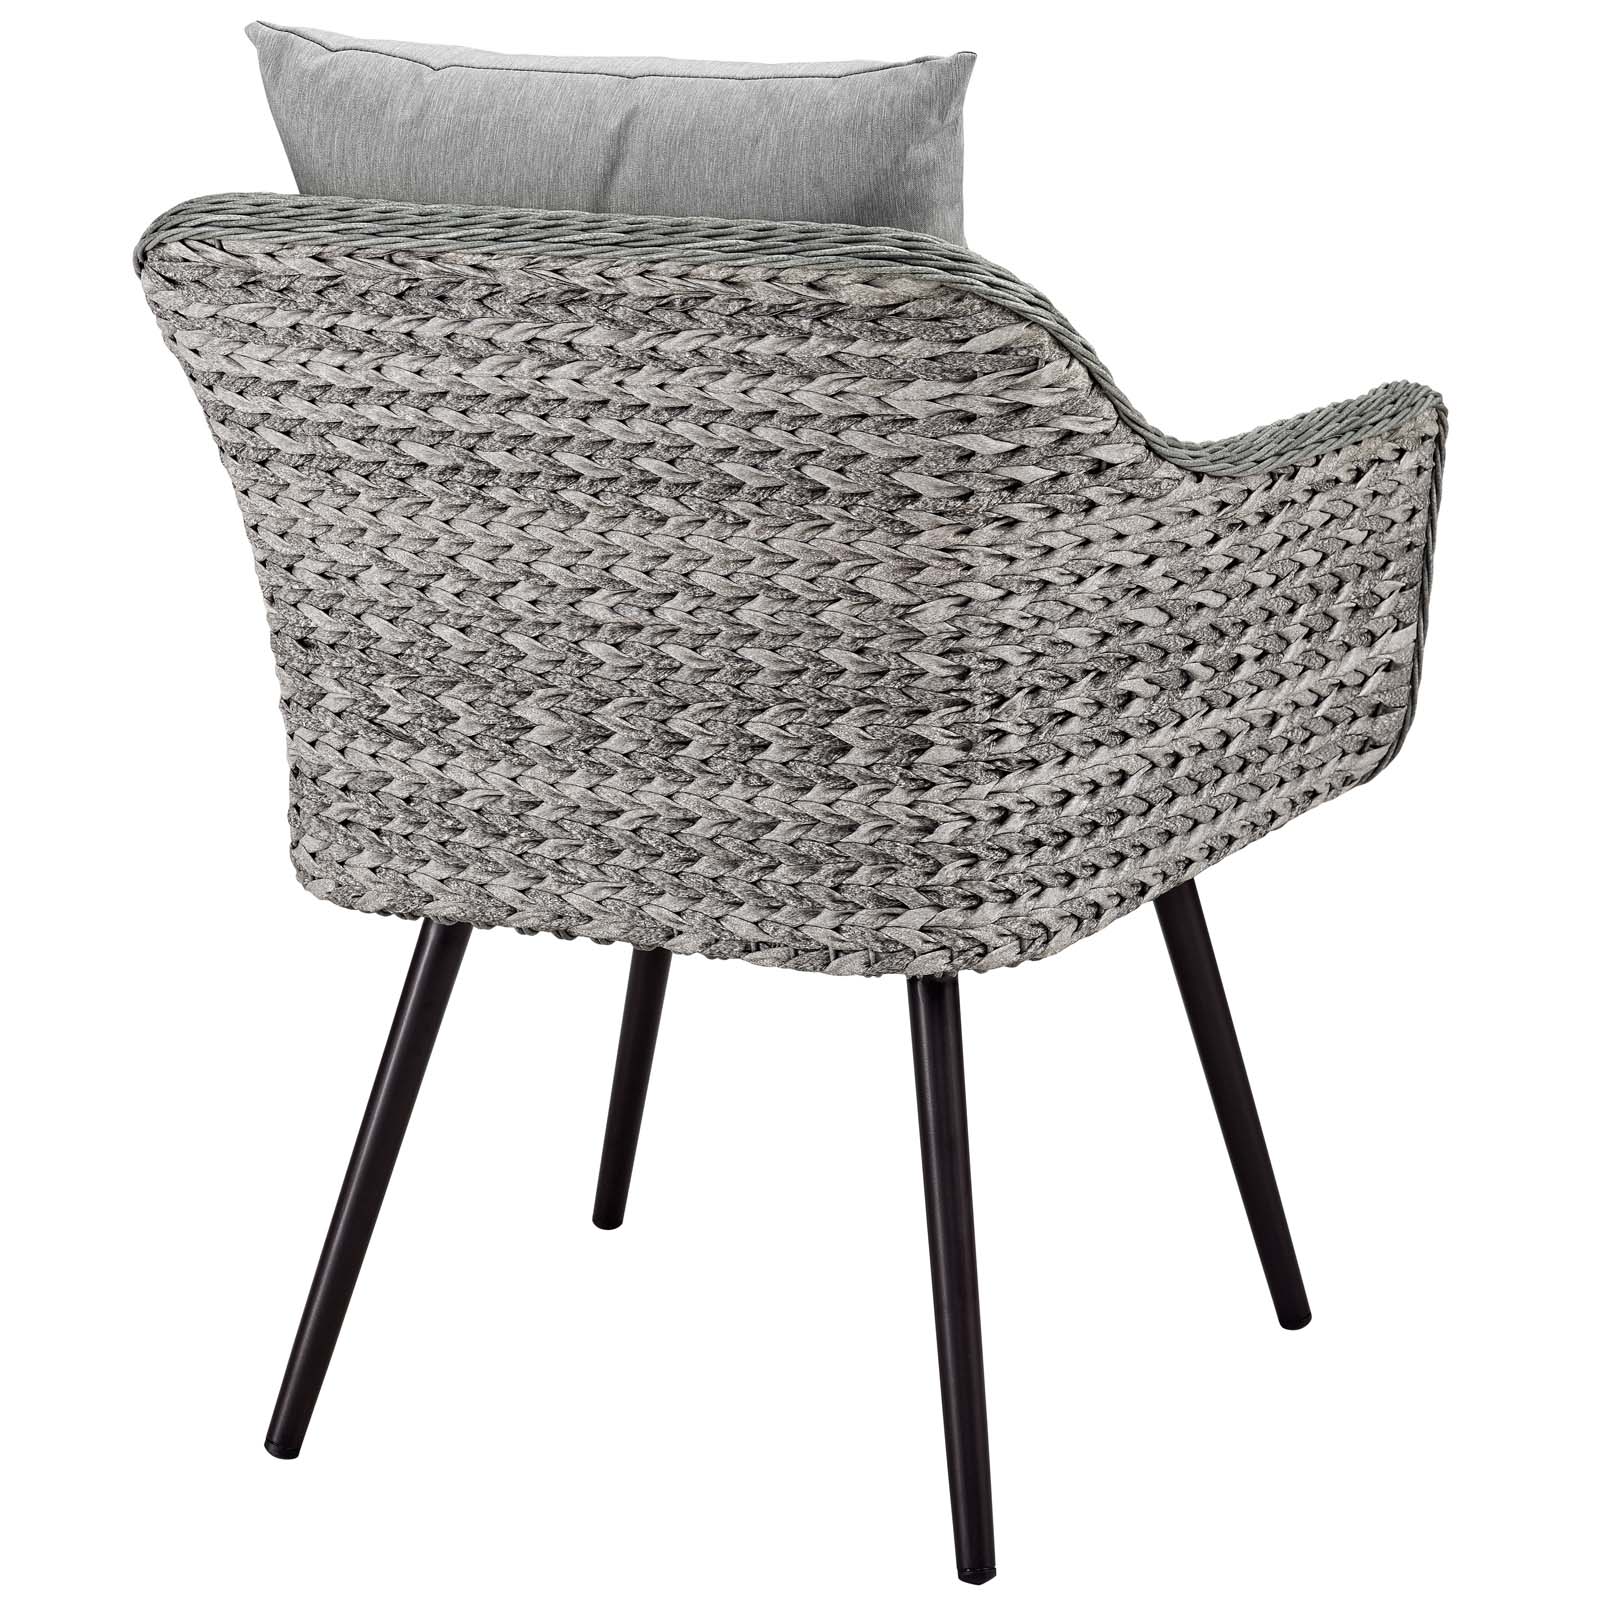 Modern Contemporary Urban Design Outdoor Patio Balcony Garden Furniture Lounge Chair Armchair, Rattan Wicker Aluminum Metal, Grey Gray - image 4 of 5